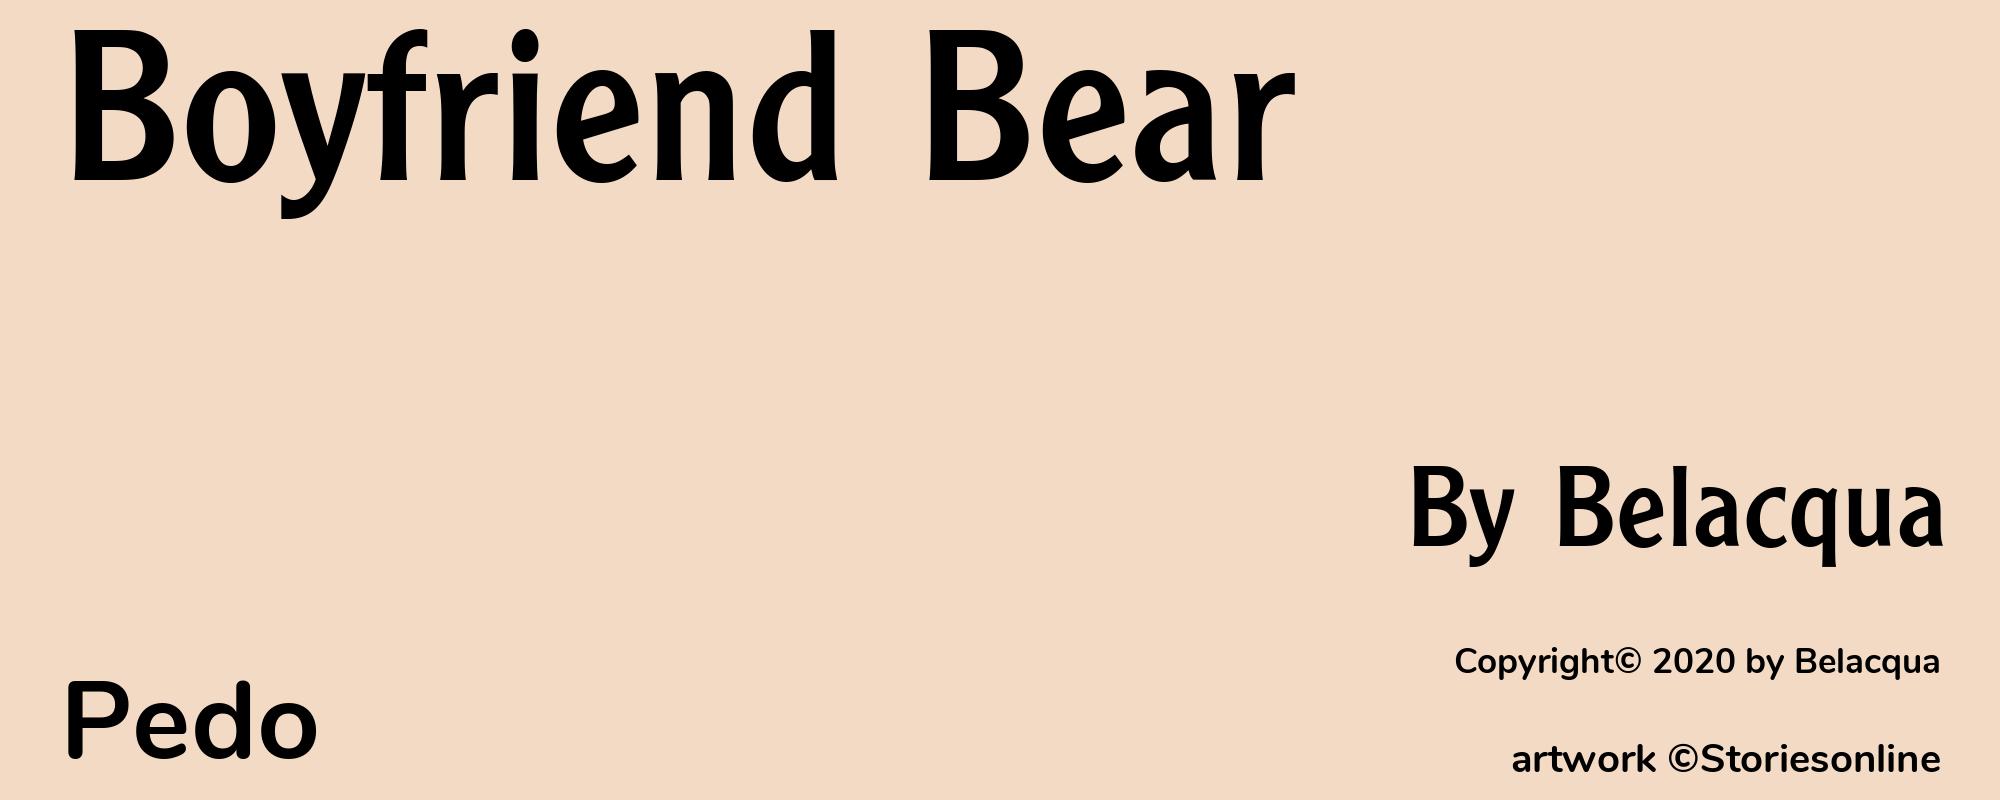 Boyfriend Bear - Cover